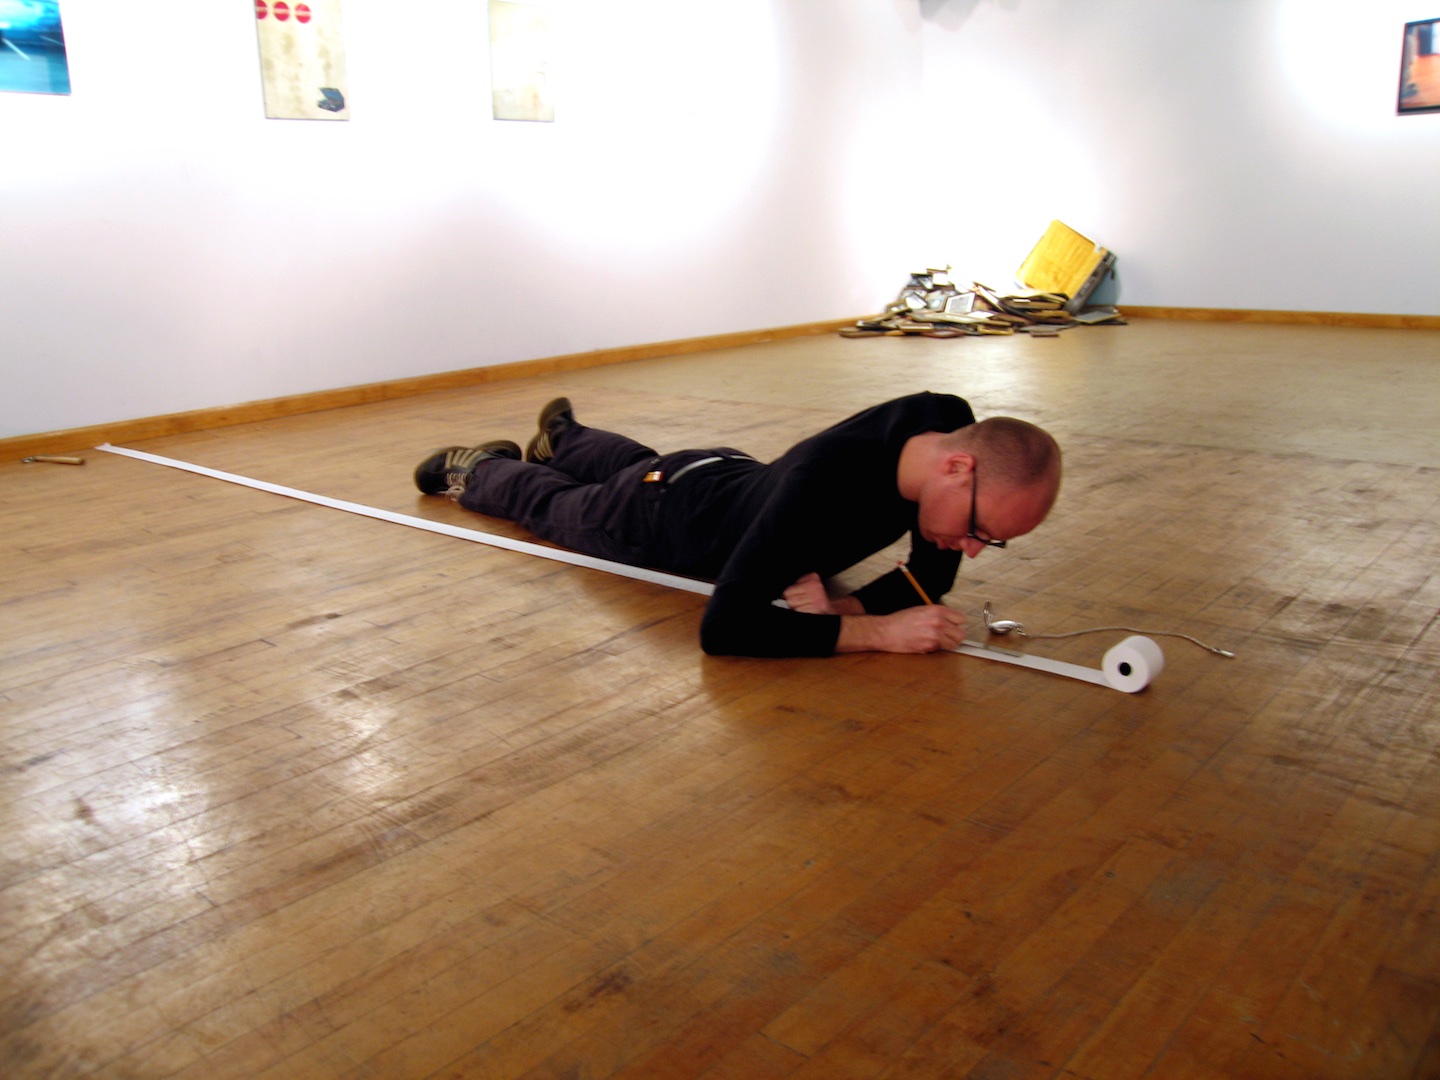     Slow Measured Crawl I , 2005  Performance Art  